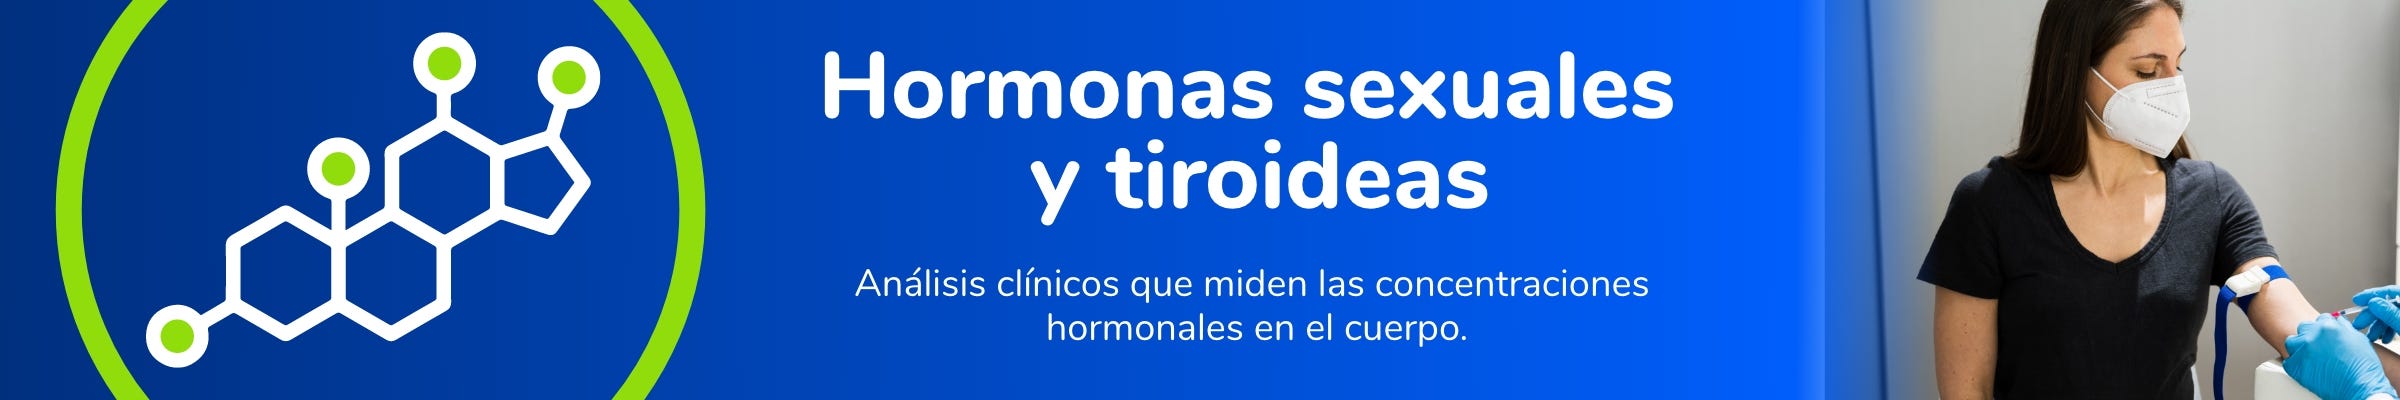 Hormonas sexuales y tiroideas